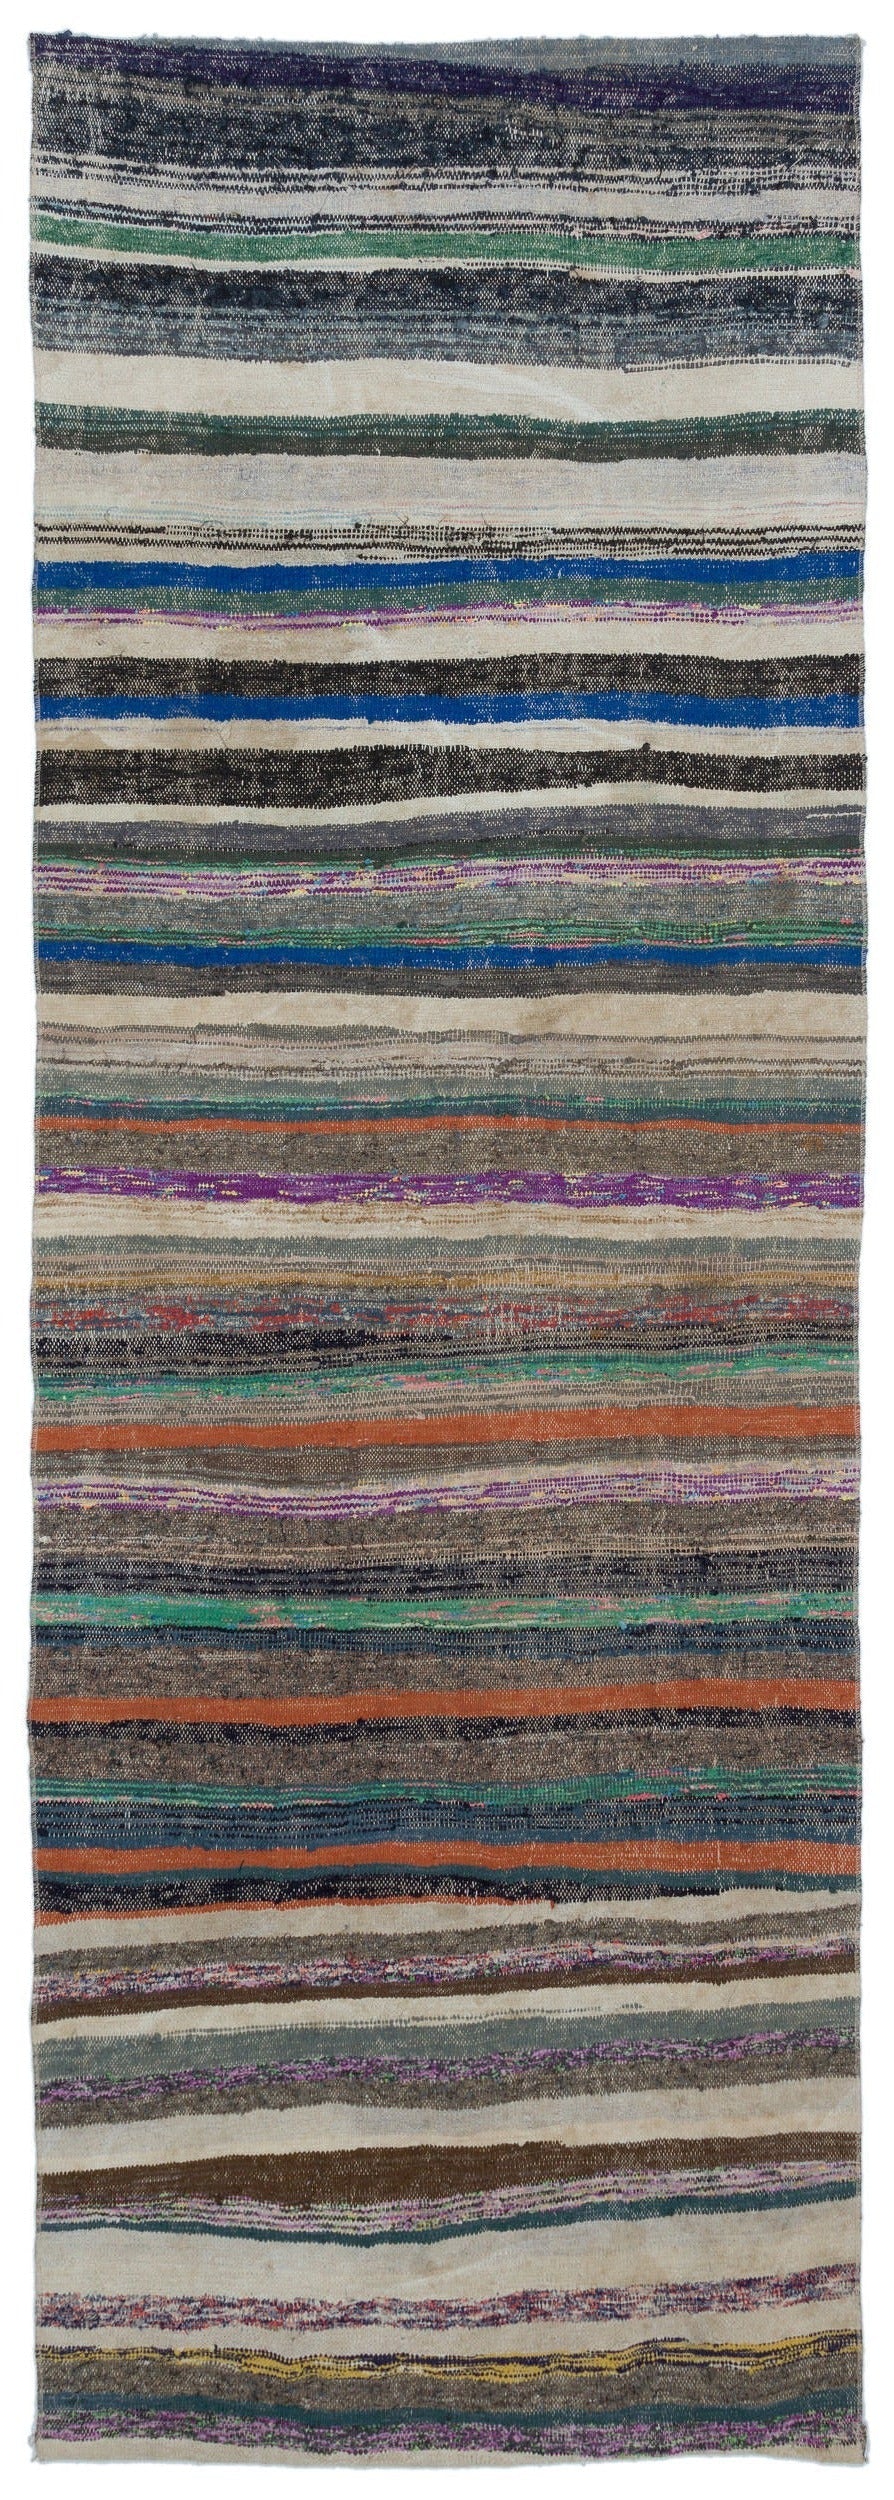 Cretan Gray Striped Wool Hand-Woven Carpet 108 x 300